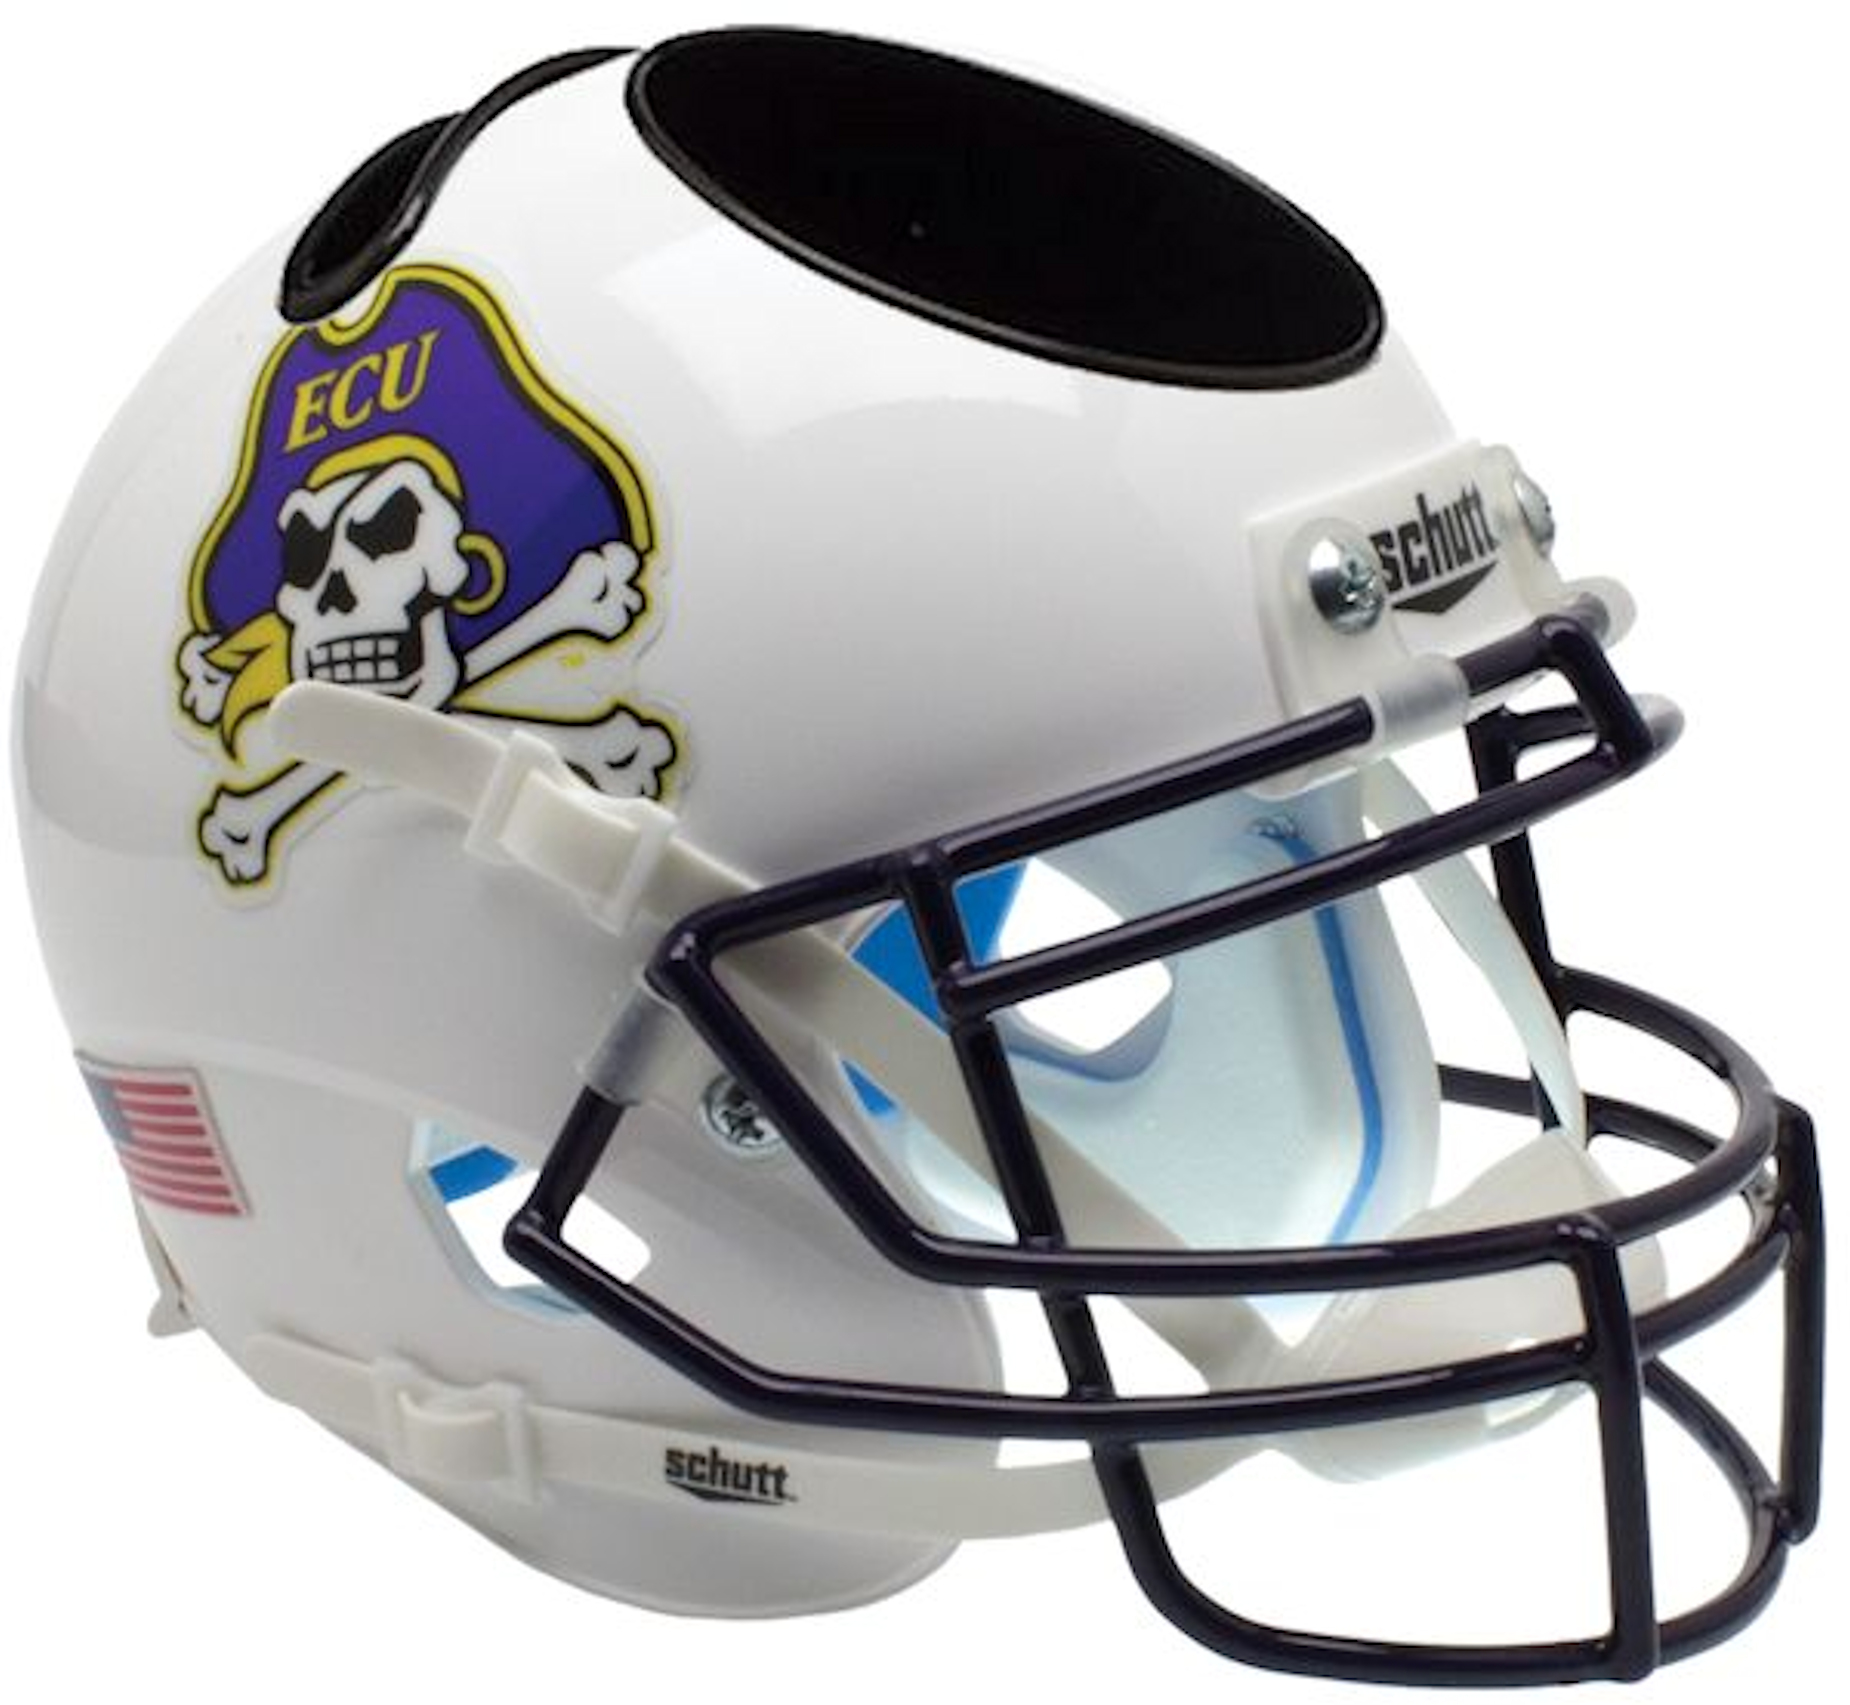 East Carolina Pirates Miniature Football Helmet Desk Caddy <B>White</B>